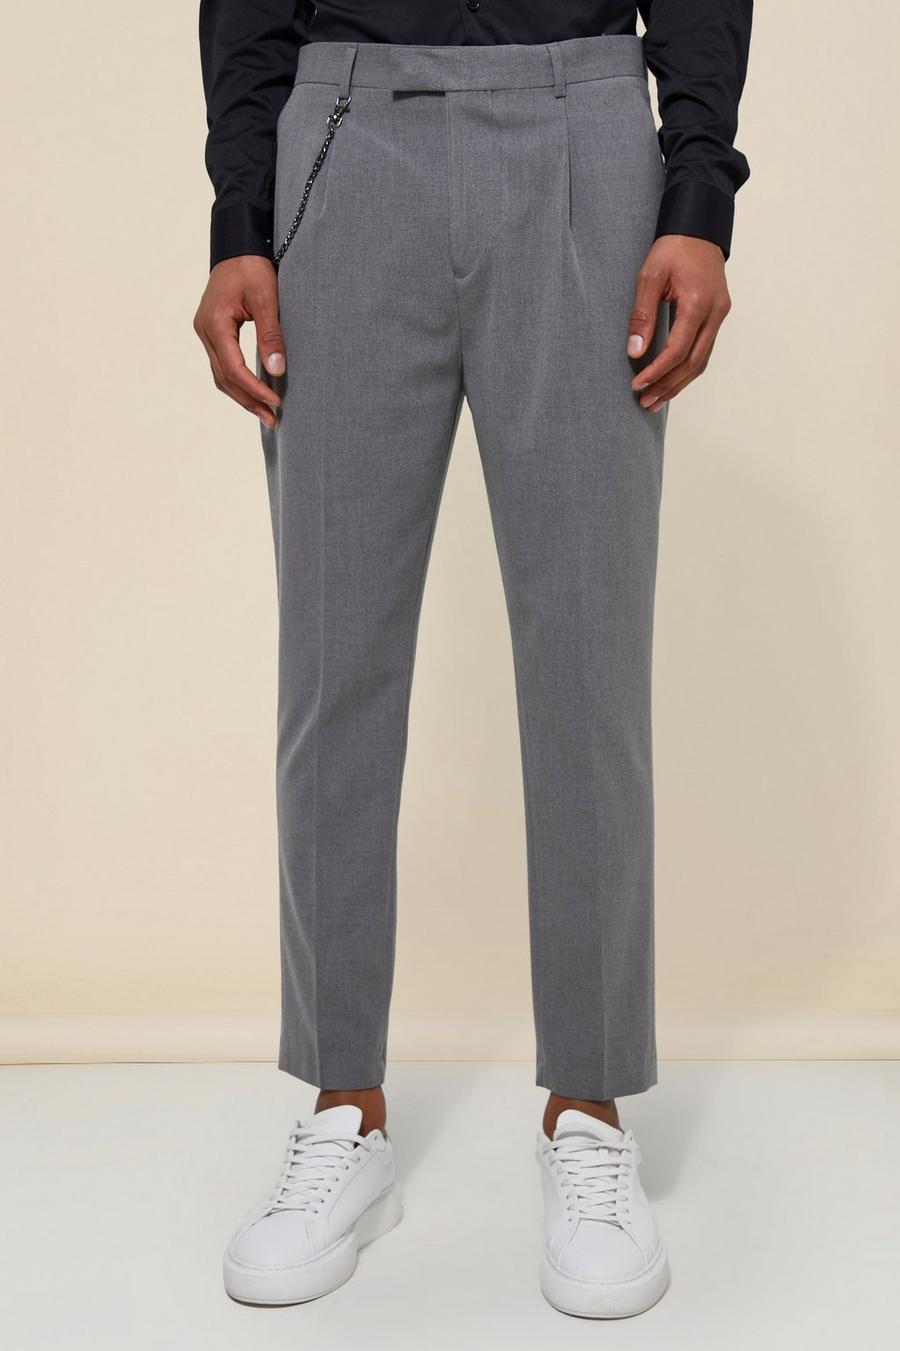 Light grey grigio מכנסיים אלגנטיים חלקים בגזרת קרסול צרה עם עיטור שרשרת 